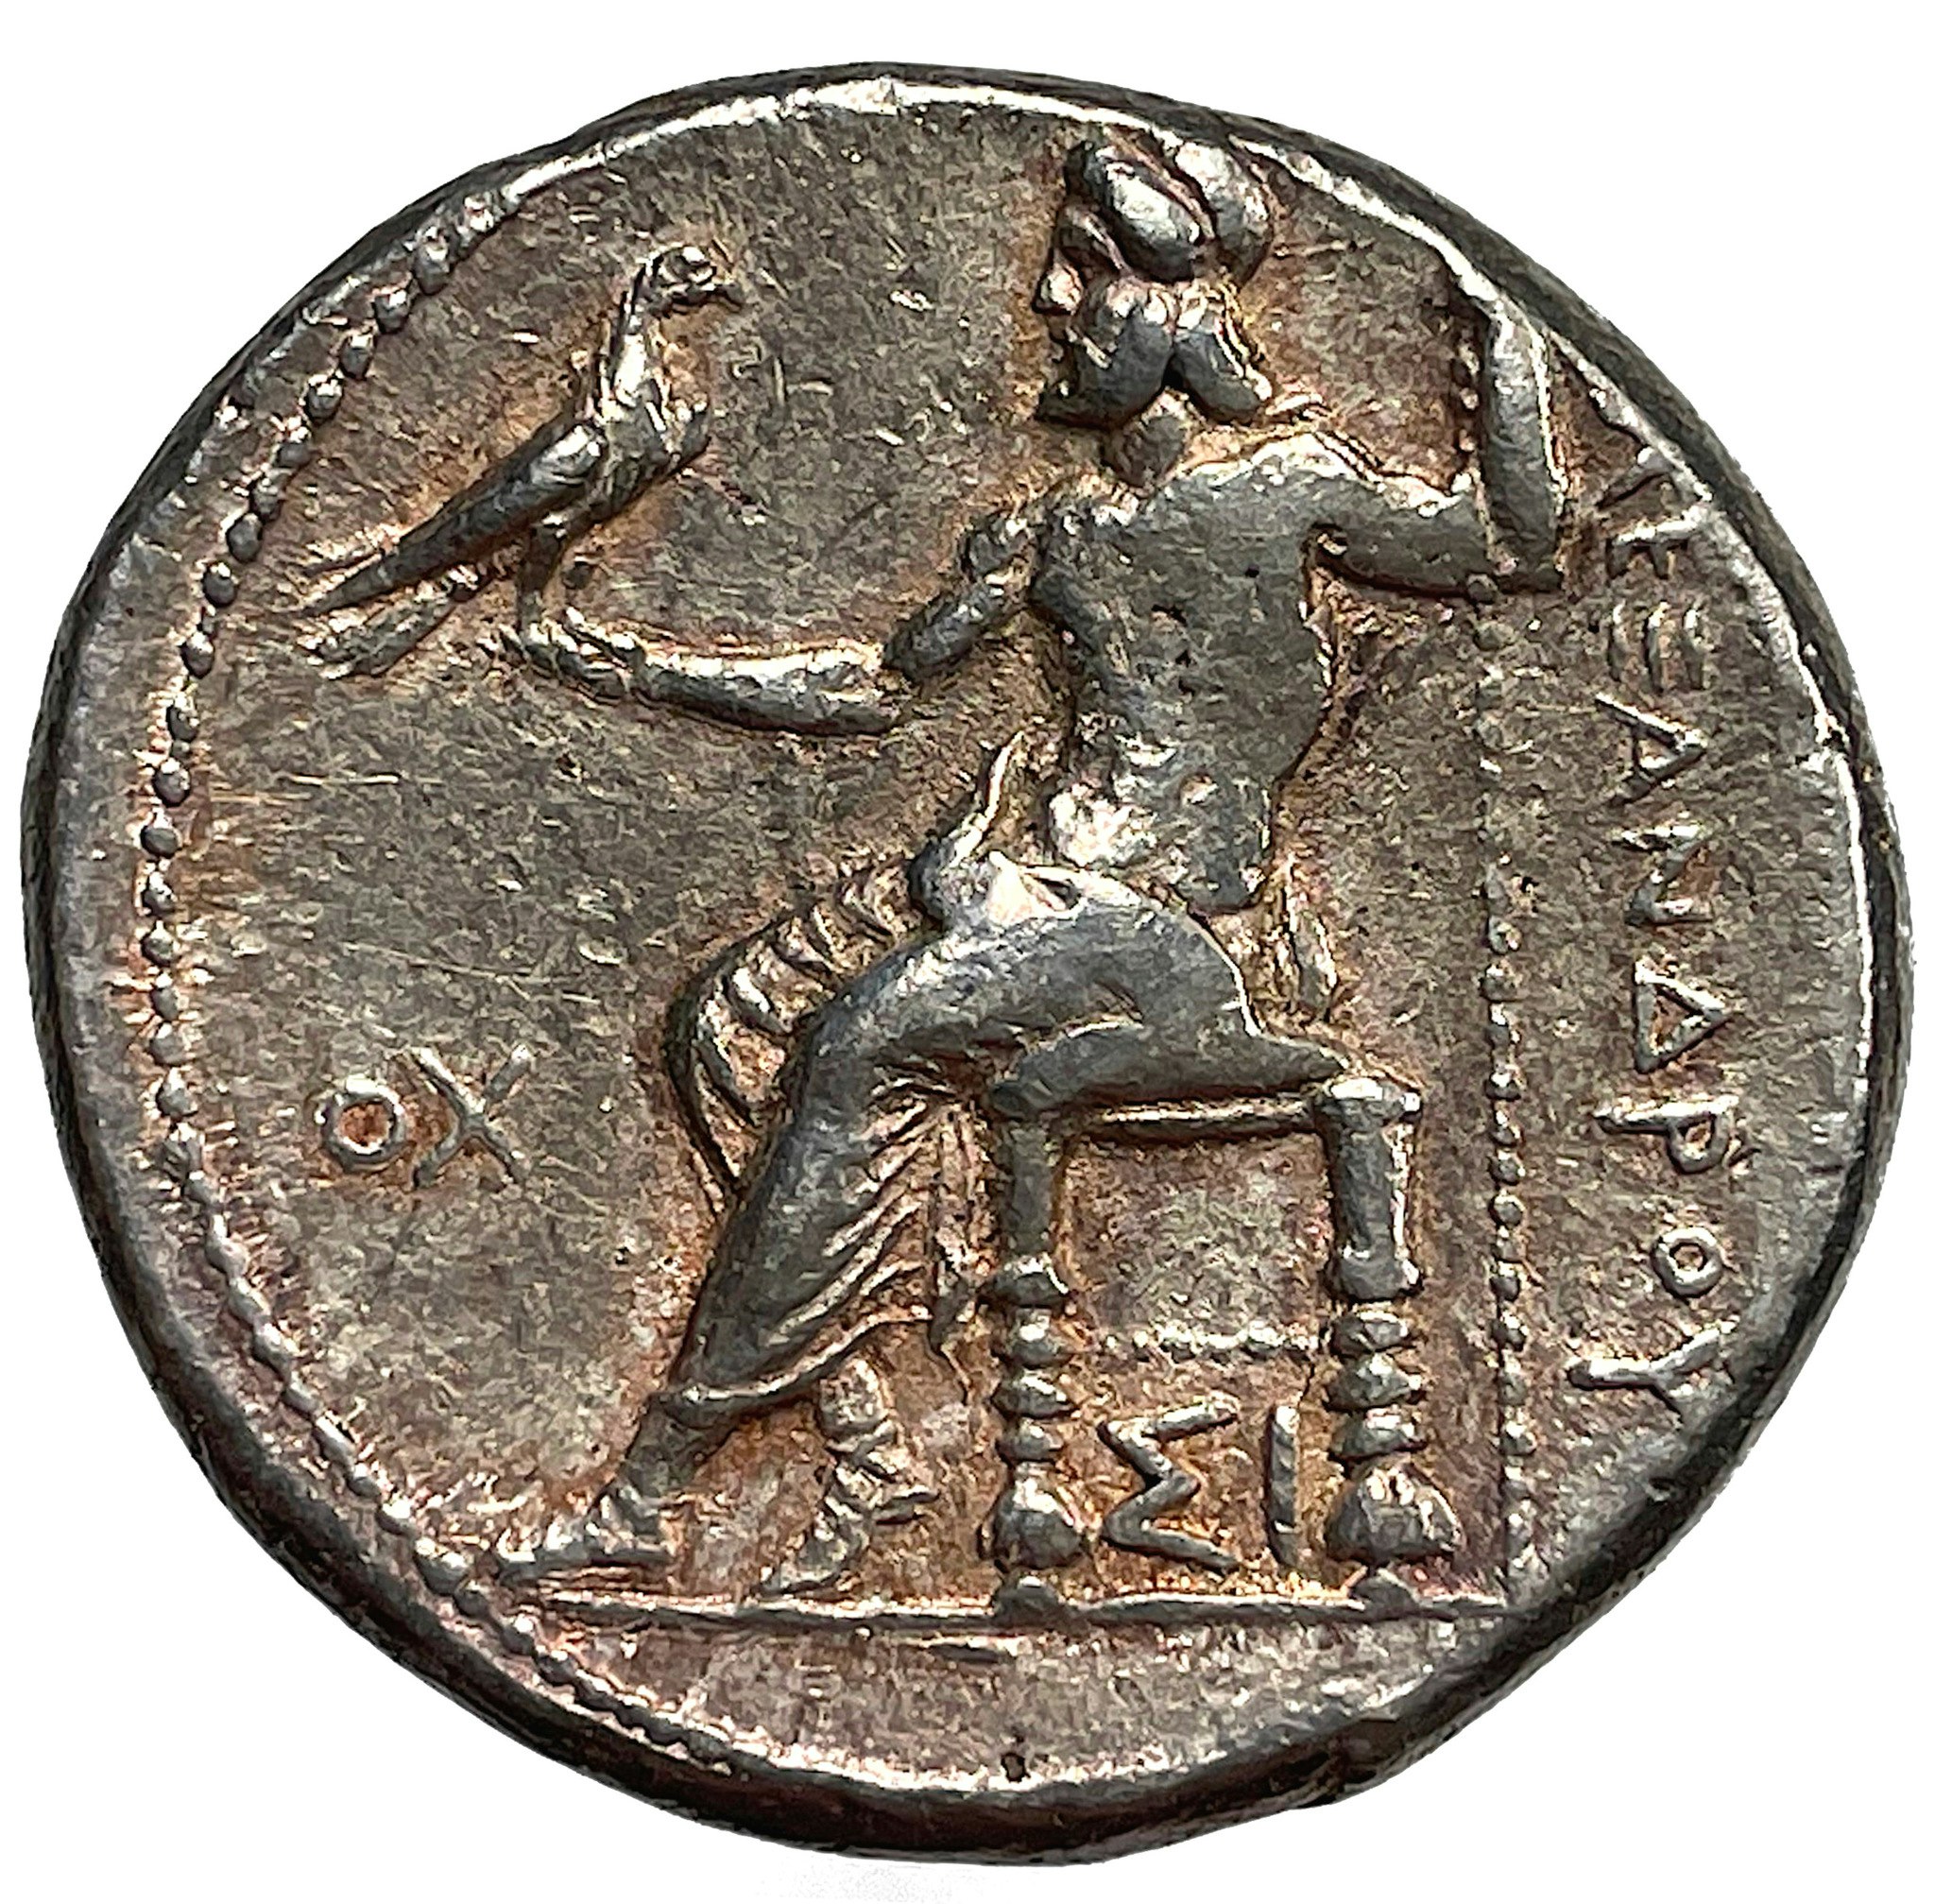 Grekland, Makedonien, Alexander III (Den Store) 336-323 f.Kr, Tetradrachm - VACKERT EXEMPLAR